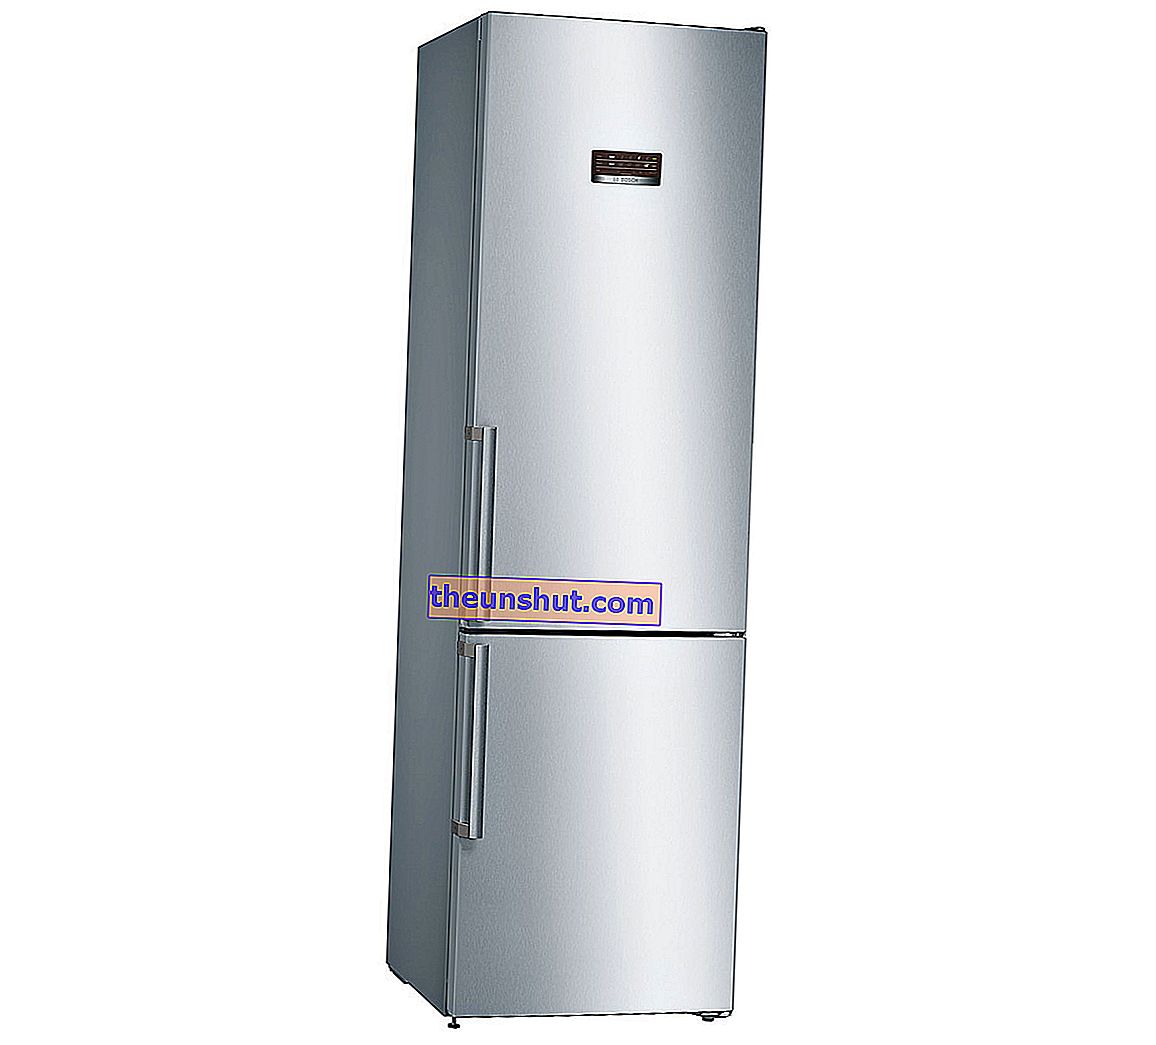 5 frigoriferi interessanti tra 800 e 1.000 euro Bosch KGN39XL3P chiusi